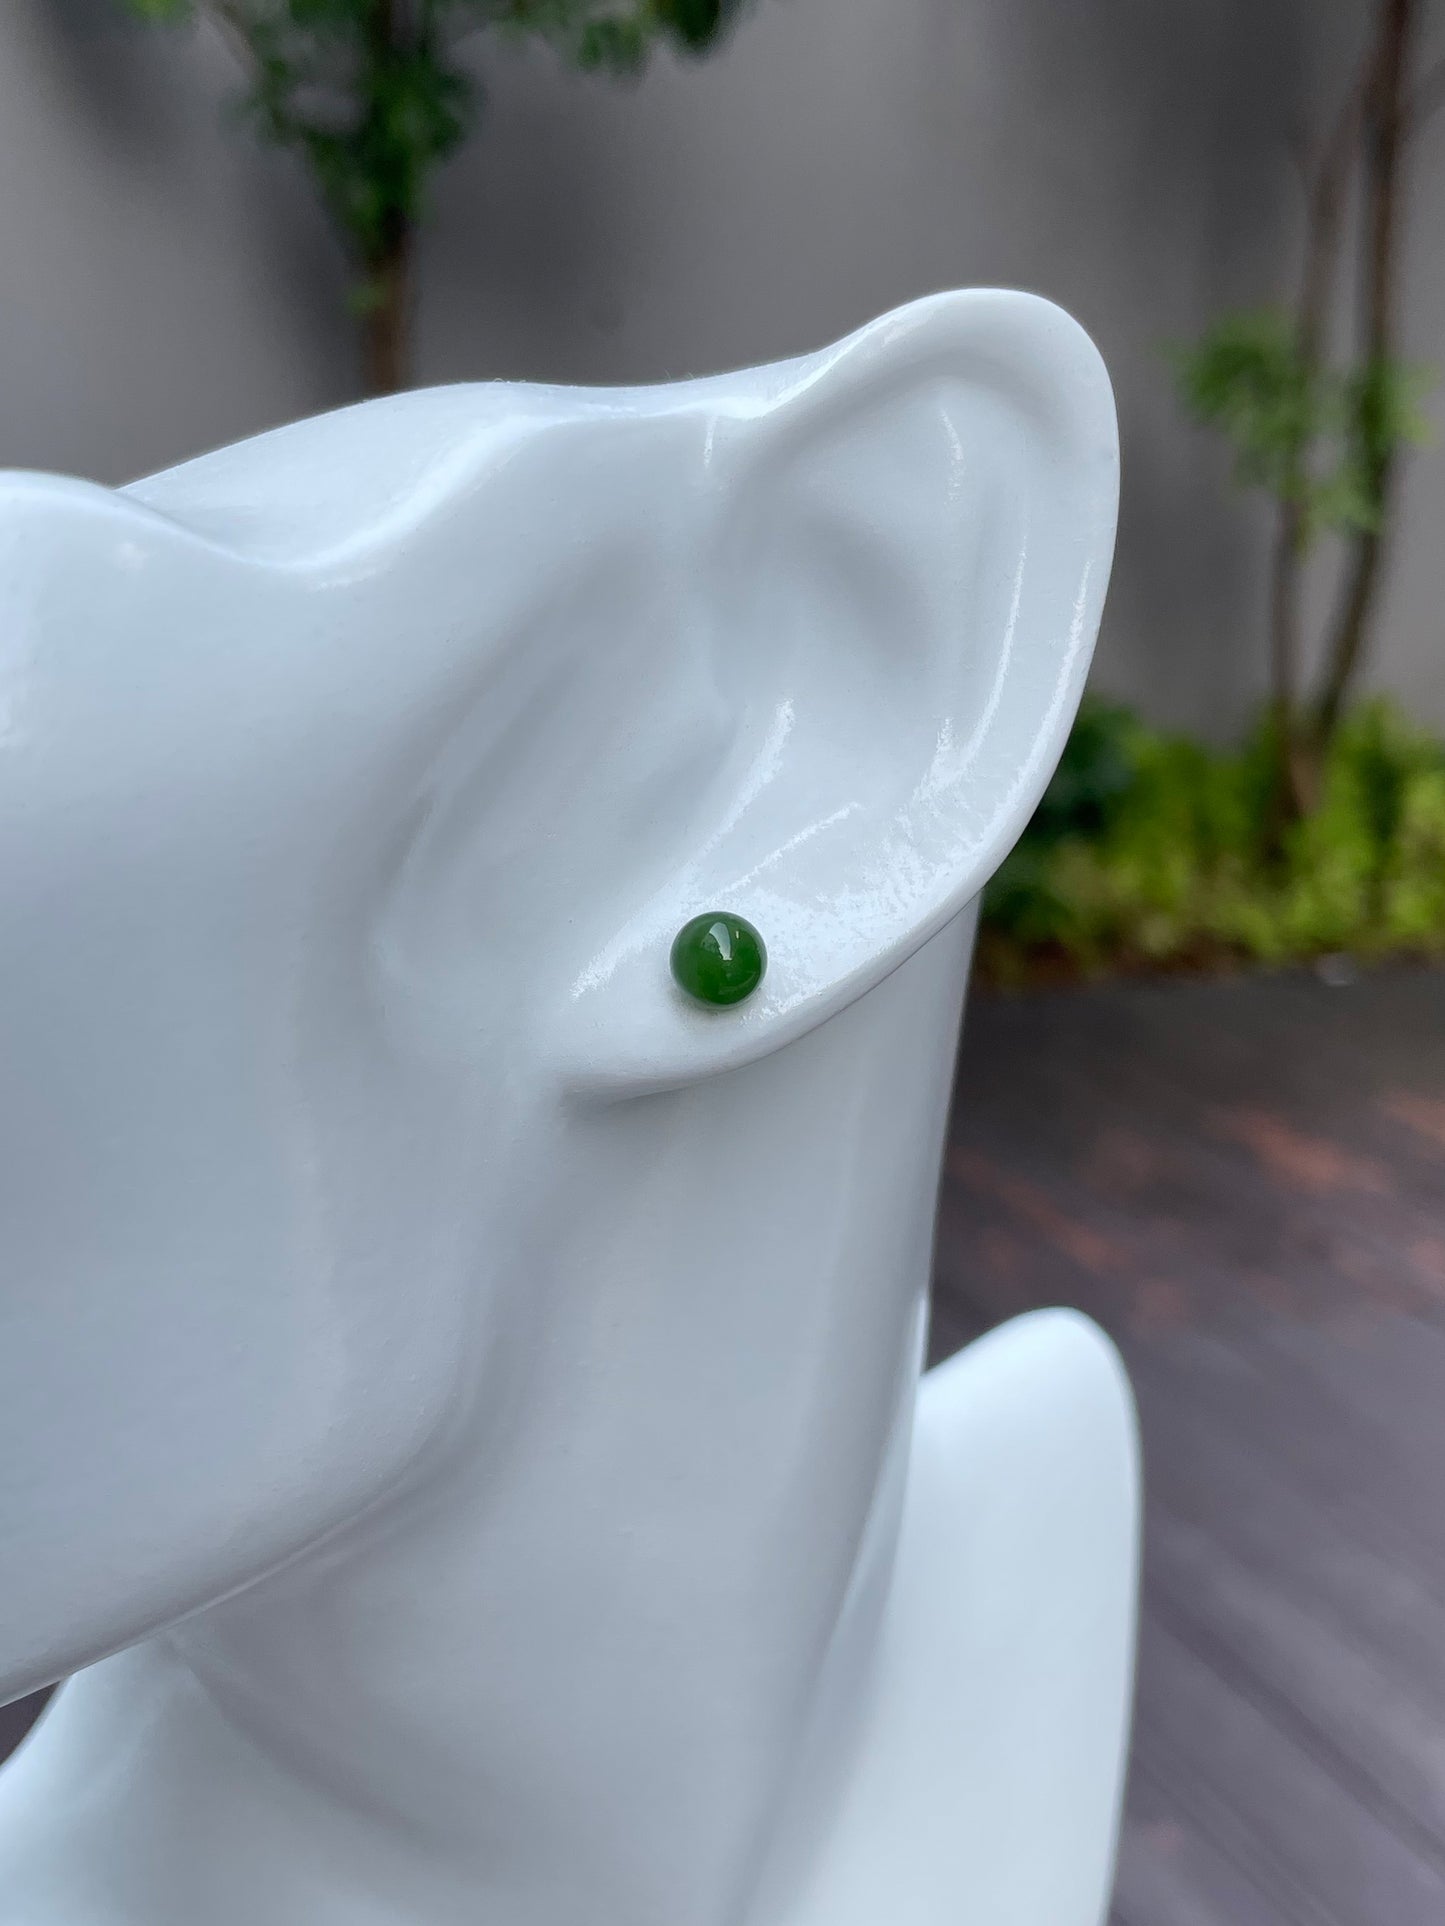 Green Nephrite Stud Earrings (NJE064)